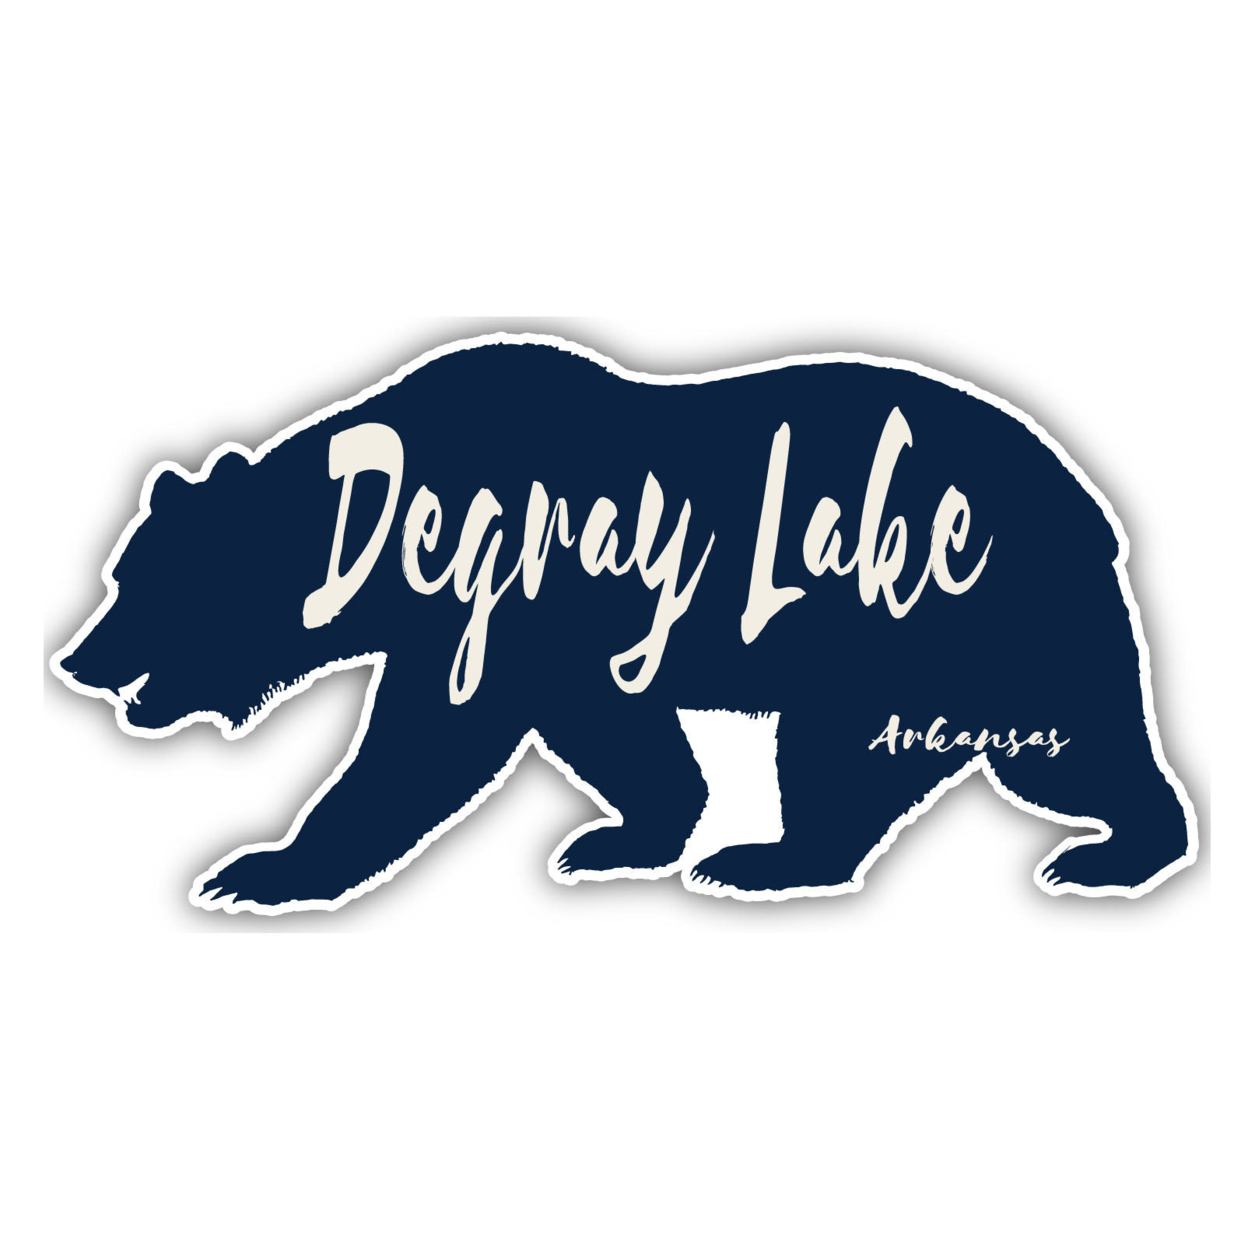 DeGray Lake Arkansas Souvenir Decorative Stickers (Choose Theme And Size) - Single Unit, 2-Inch, Tent